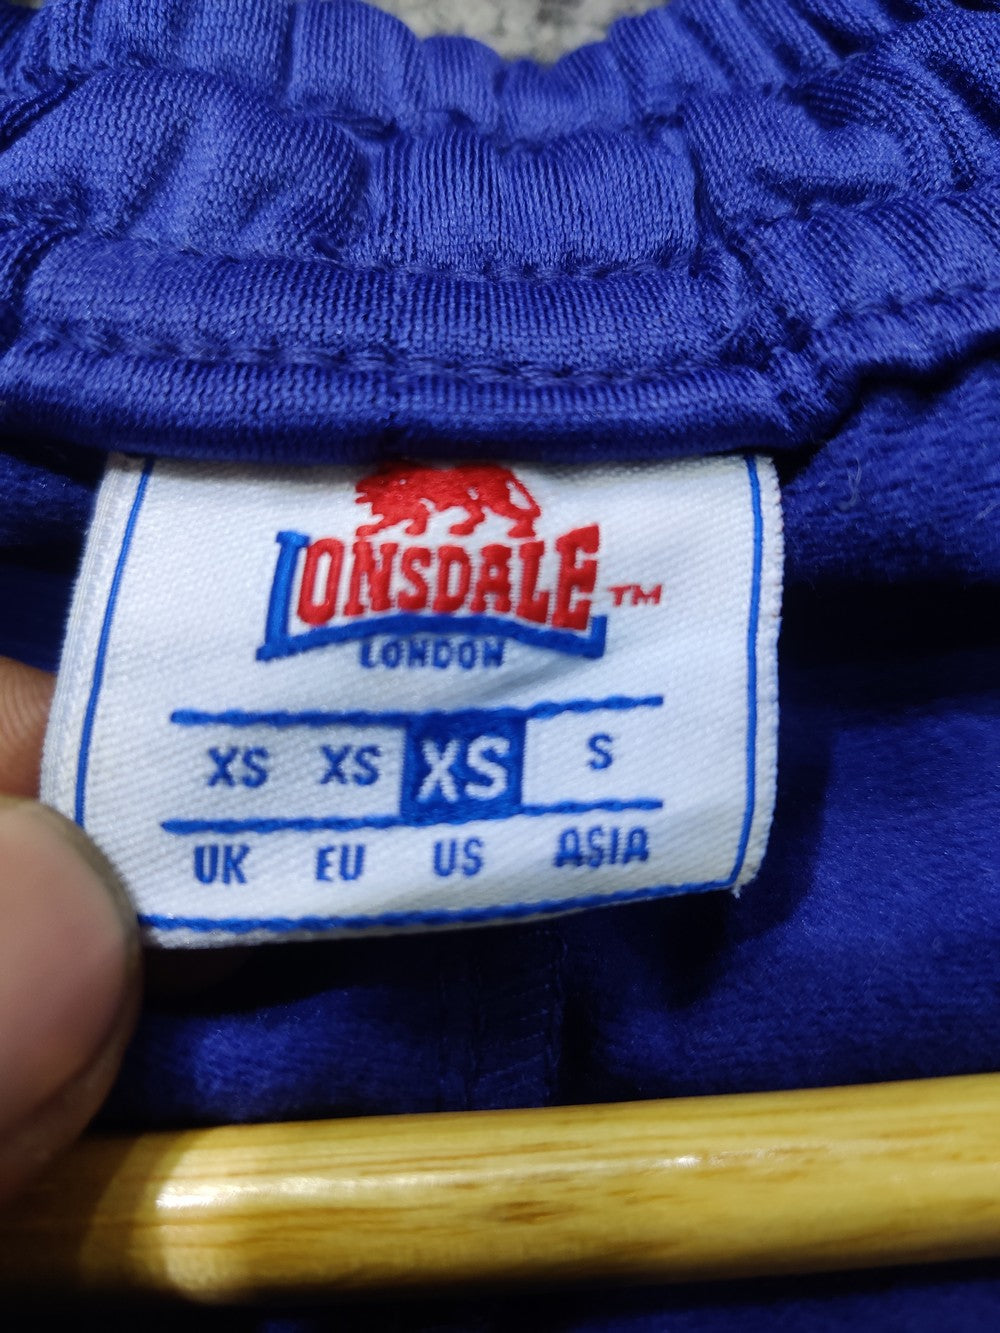 Lonsdale London Branded Original Sports Winter Trouser For Men